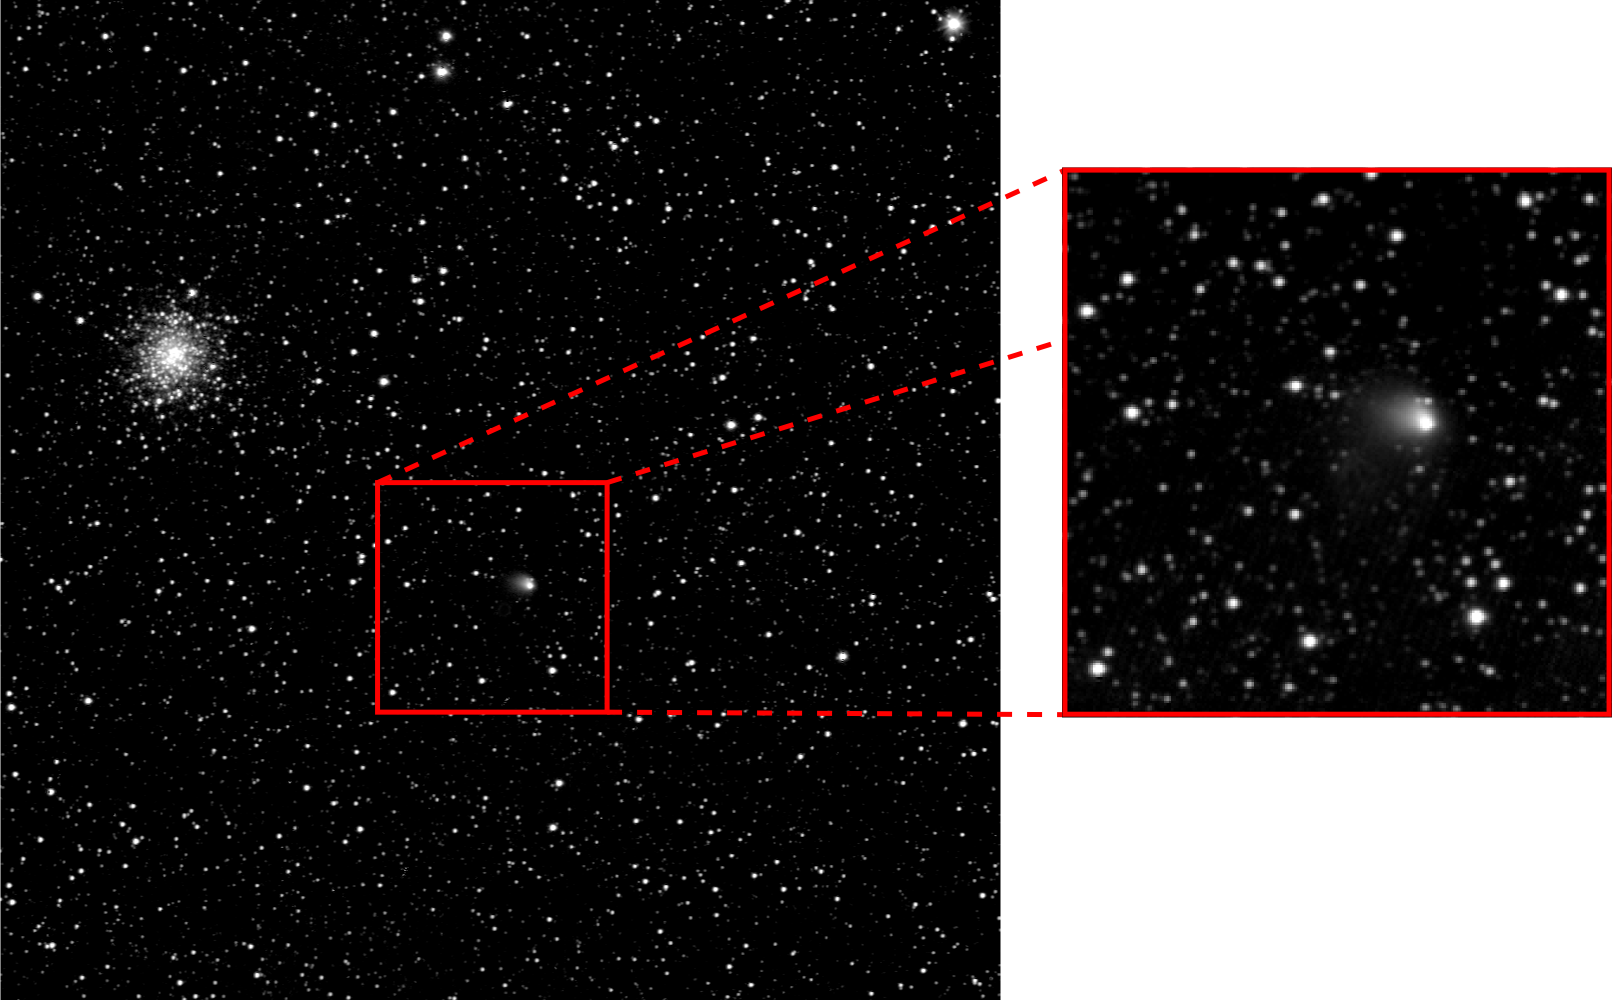 Cliché de la comète 67P/Churyumov–Gerasimenko réalisé par la sonde Rosetta le 30 avril 2014